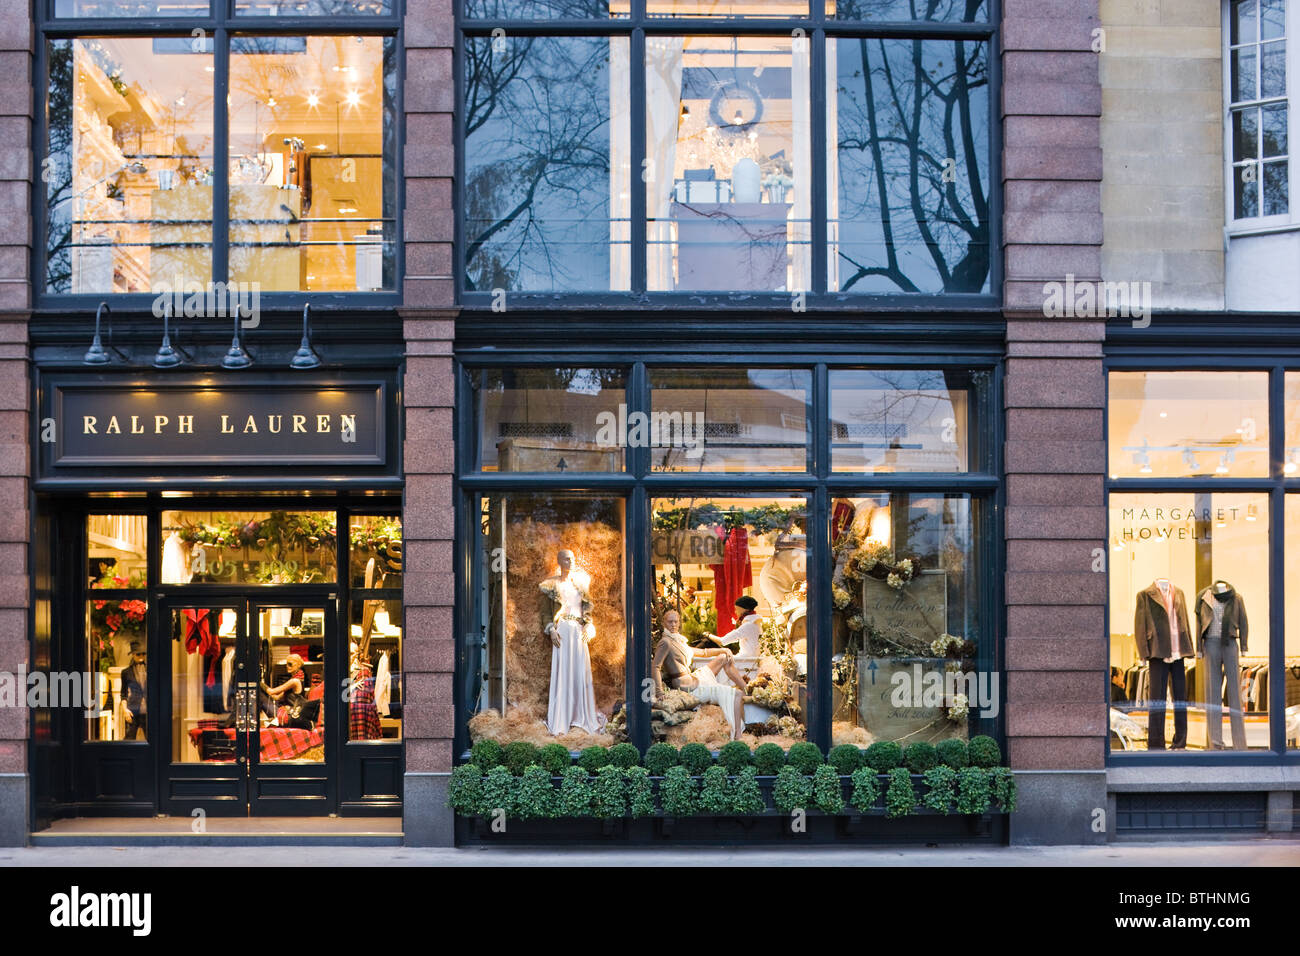 Guide To Ralph Lauren Shops In London - London Kensington Guide